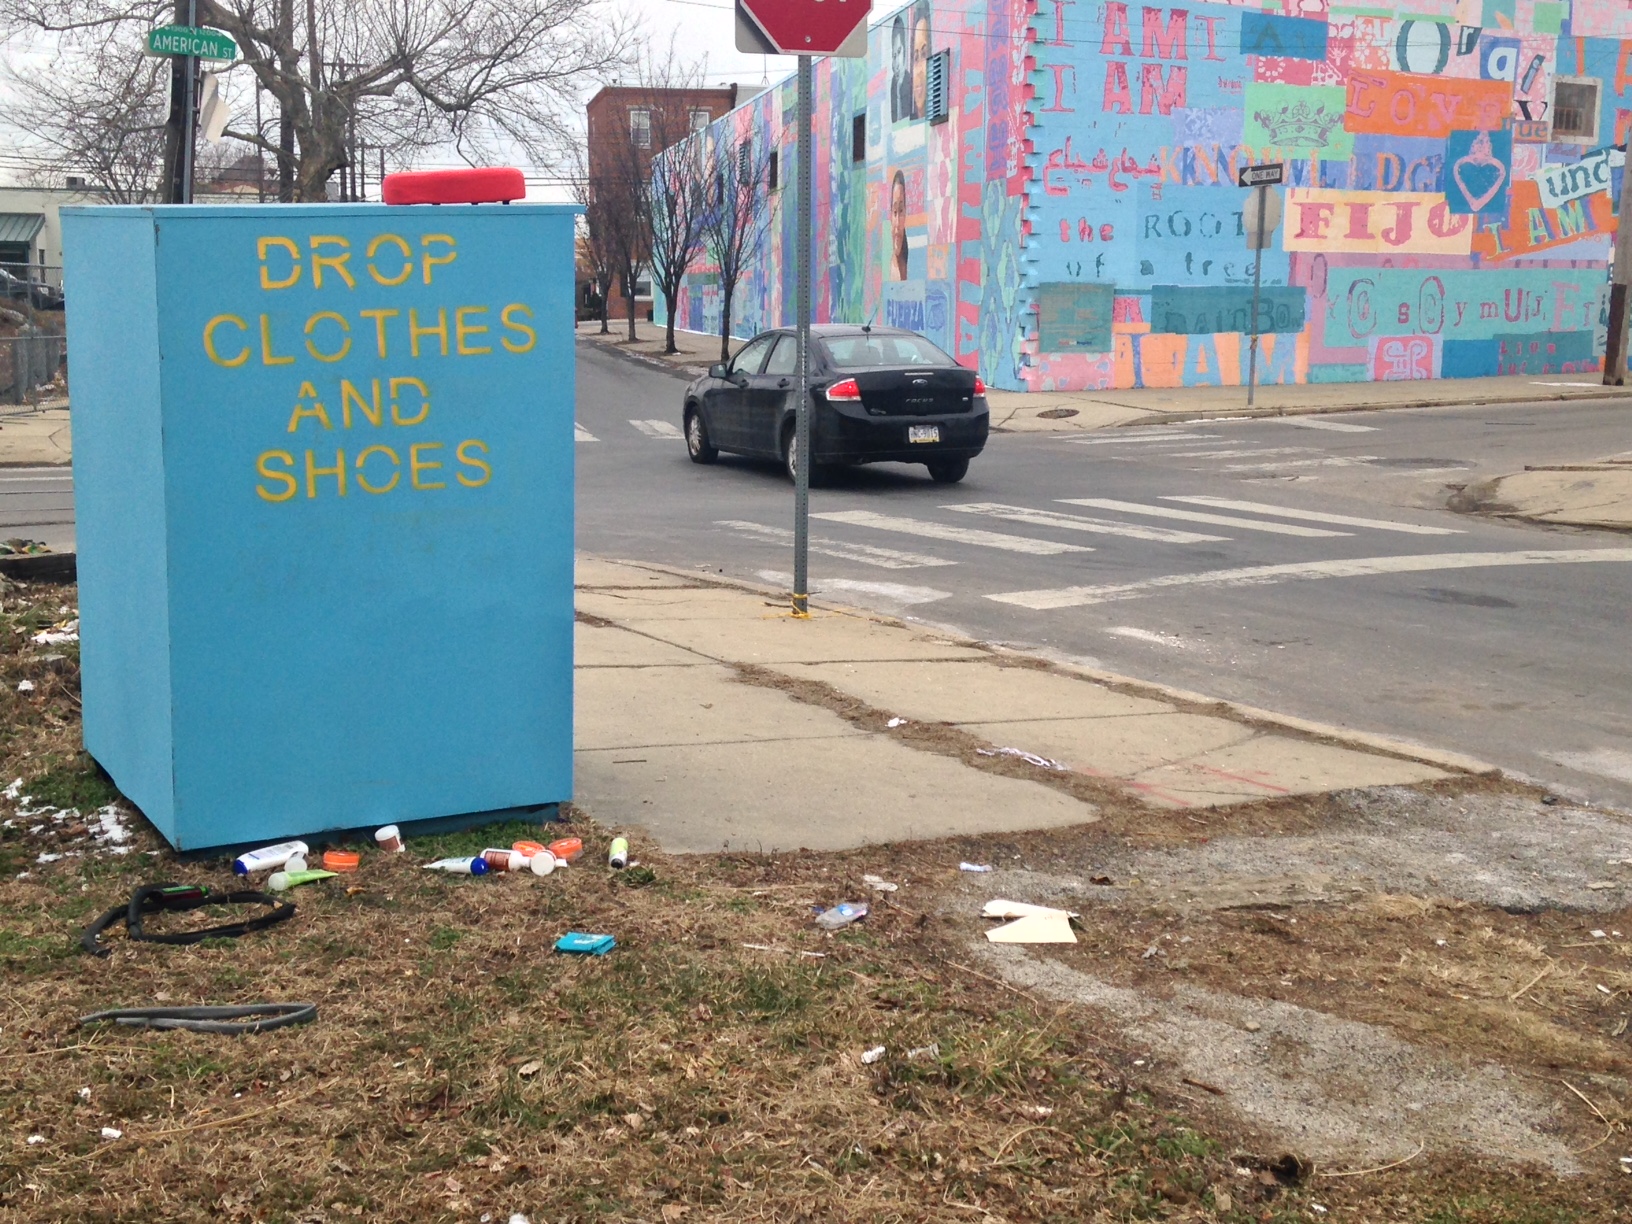 Community Greening Made Easier with Microgrants From Keep Philadelphia Beautiful